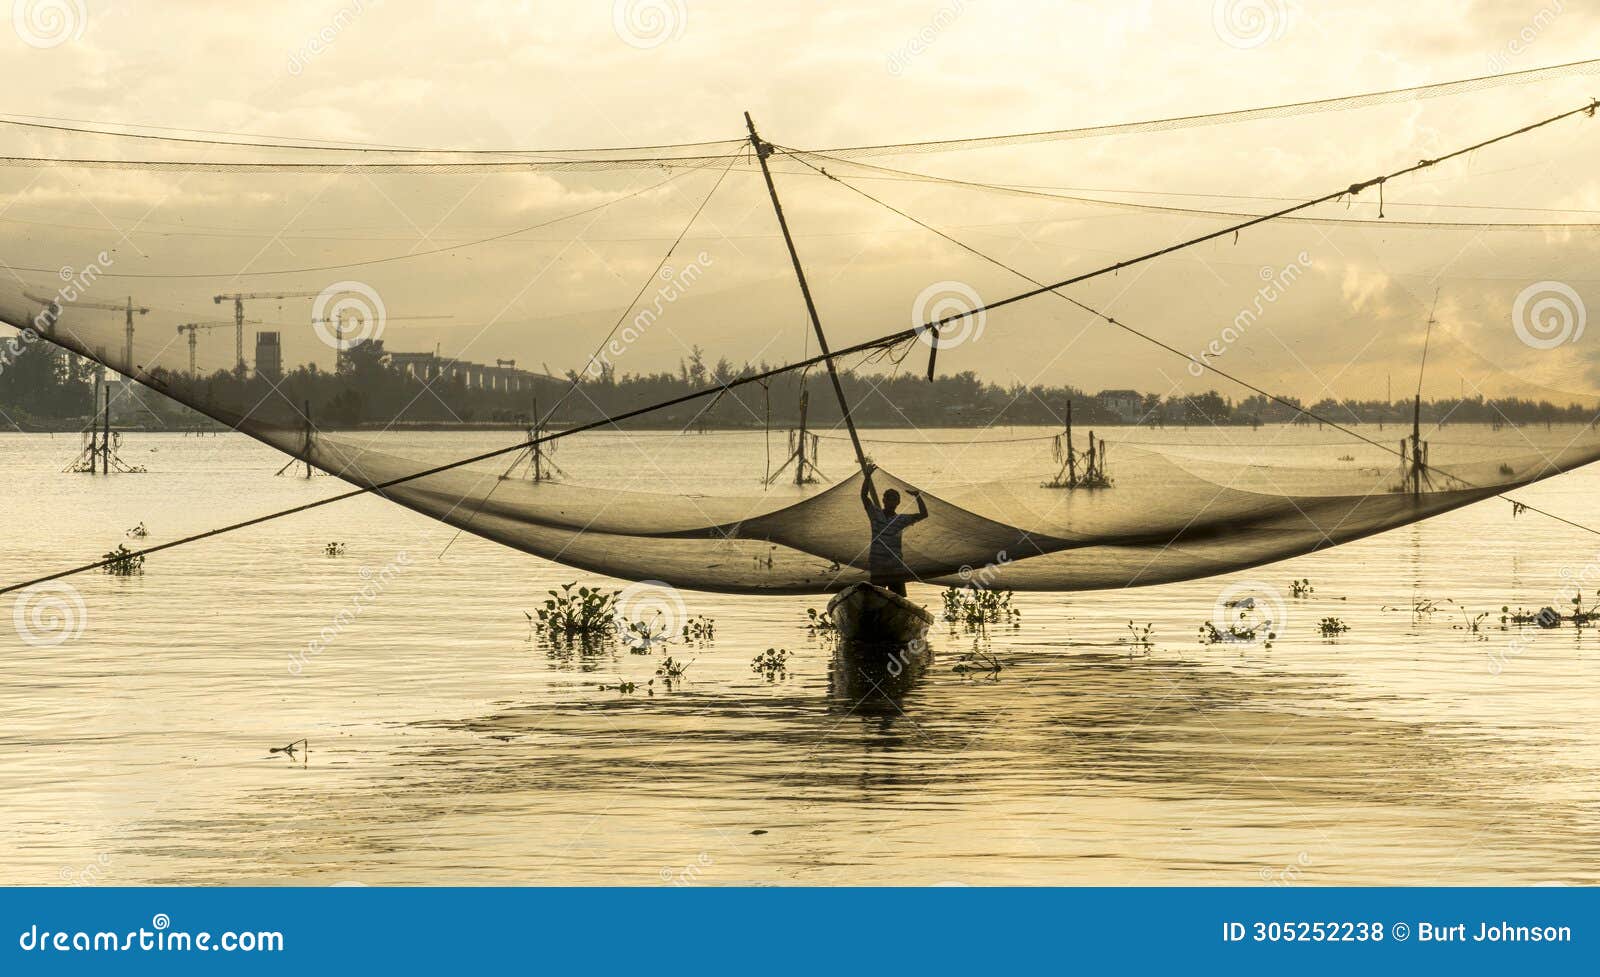 https://thumbs.dreamstime.com/z/man-standing-boat-water-fishing-nets-sunrise-hoi-vietnam-305252238.jpg